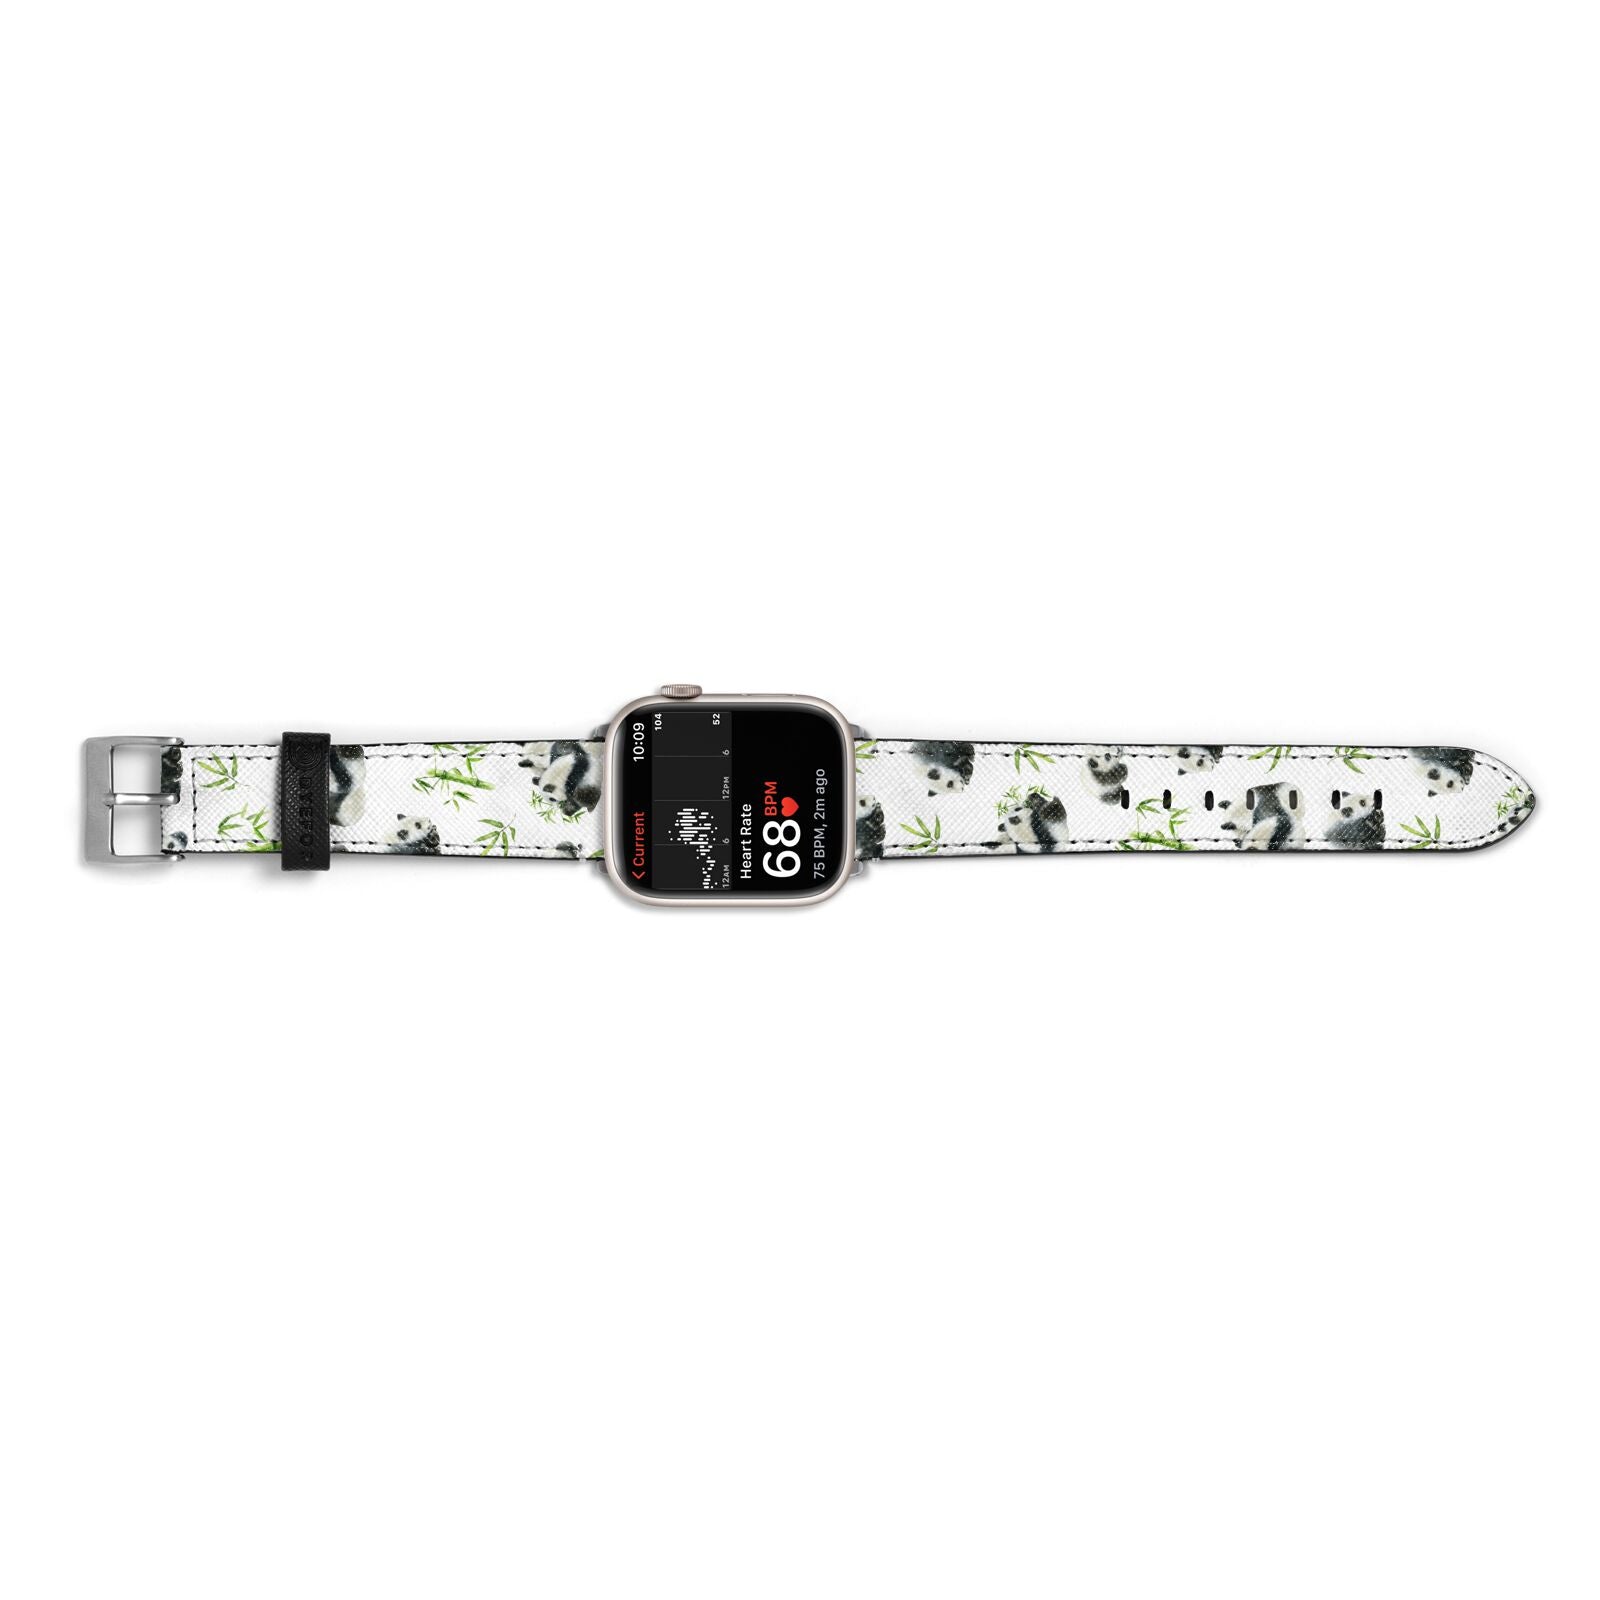 Panda Apple Watch Strap Size 38mm Landscape Image Silver Hardware